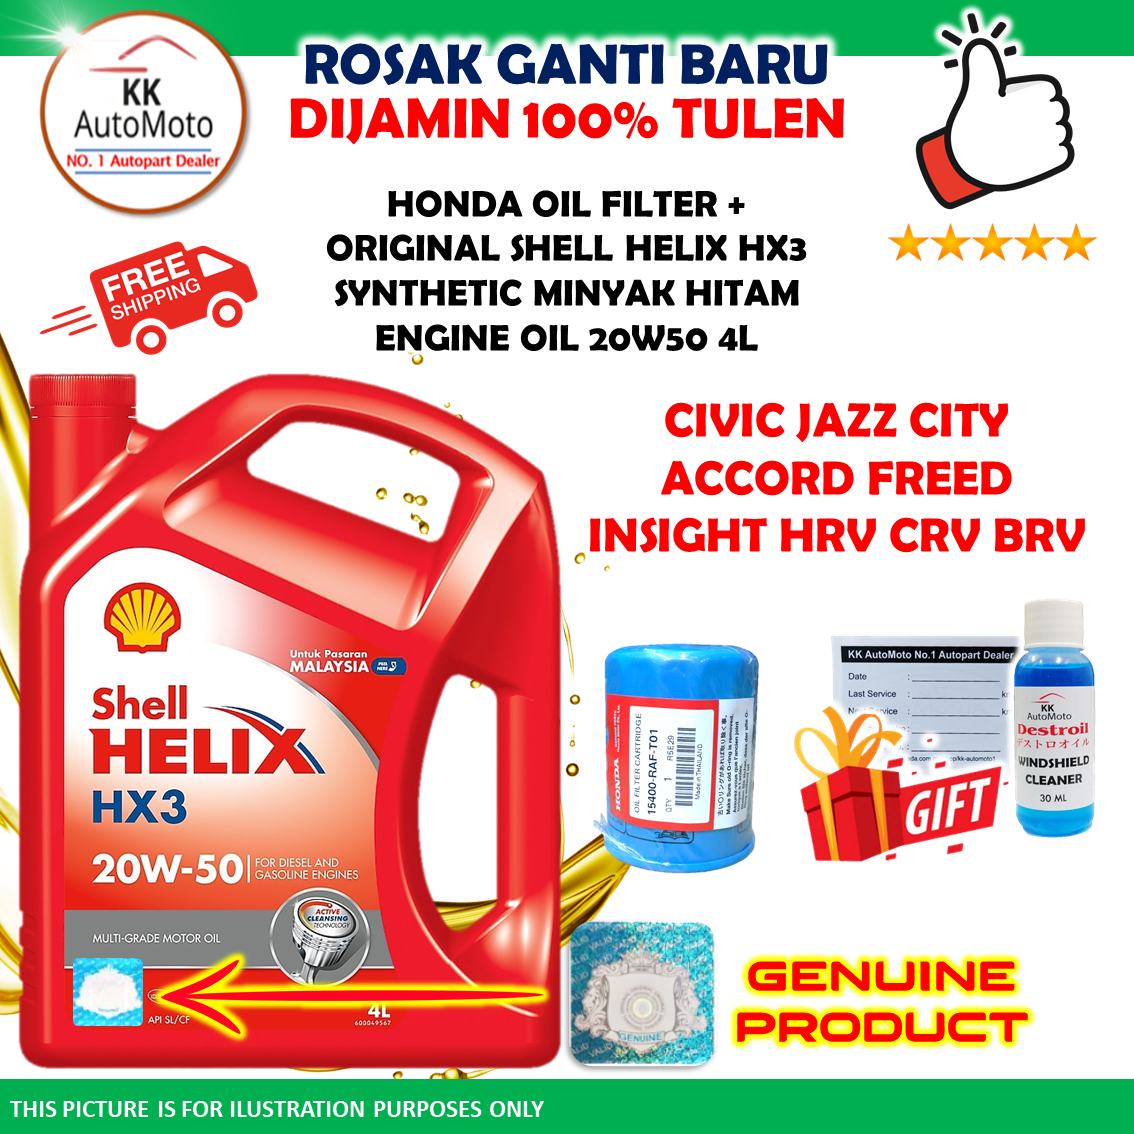 Original Shell Helix HX3 Mineral Engine Oil 20W-50 20W50 + Genuine Honda Oil Filter for Honda Civic Jazz City Accord Freed Insight